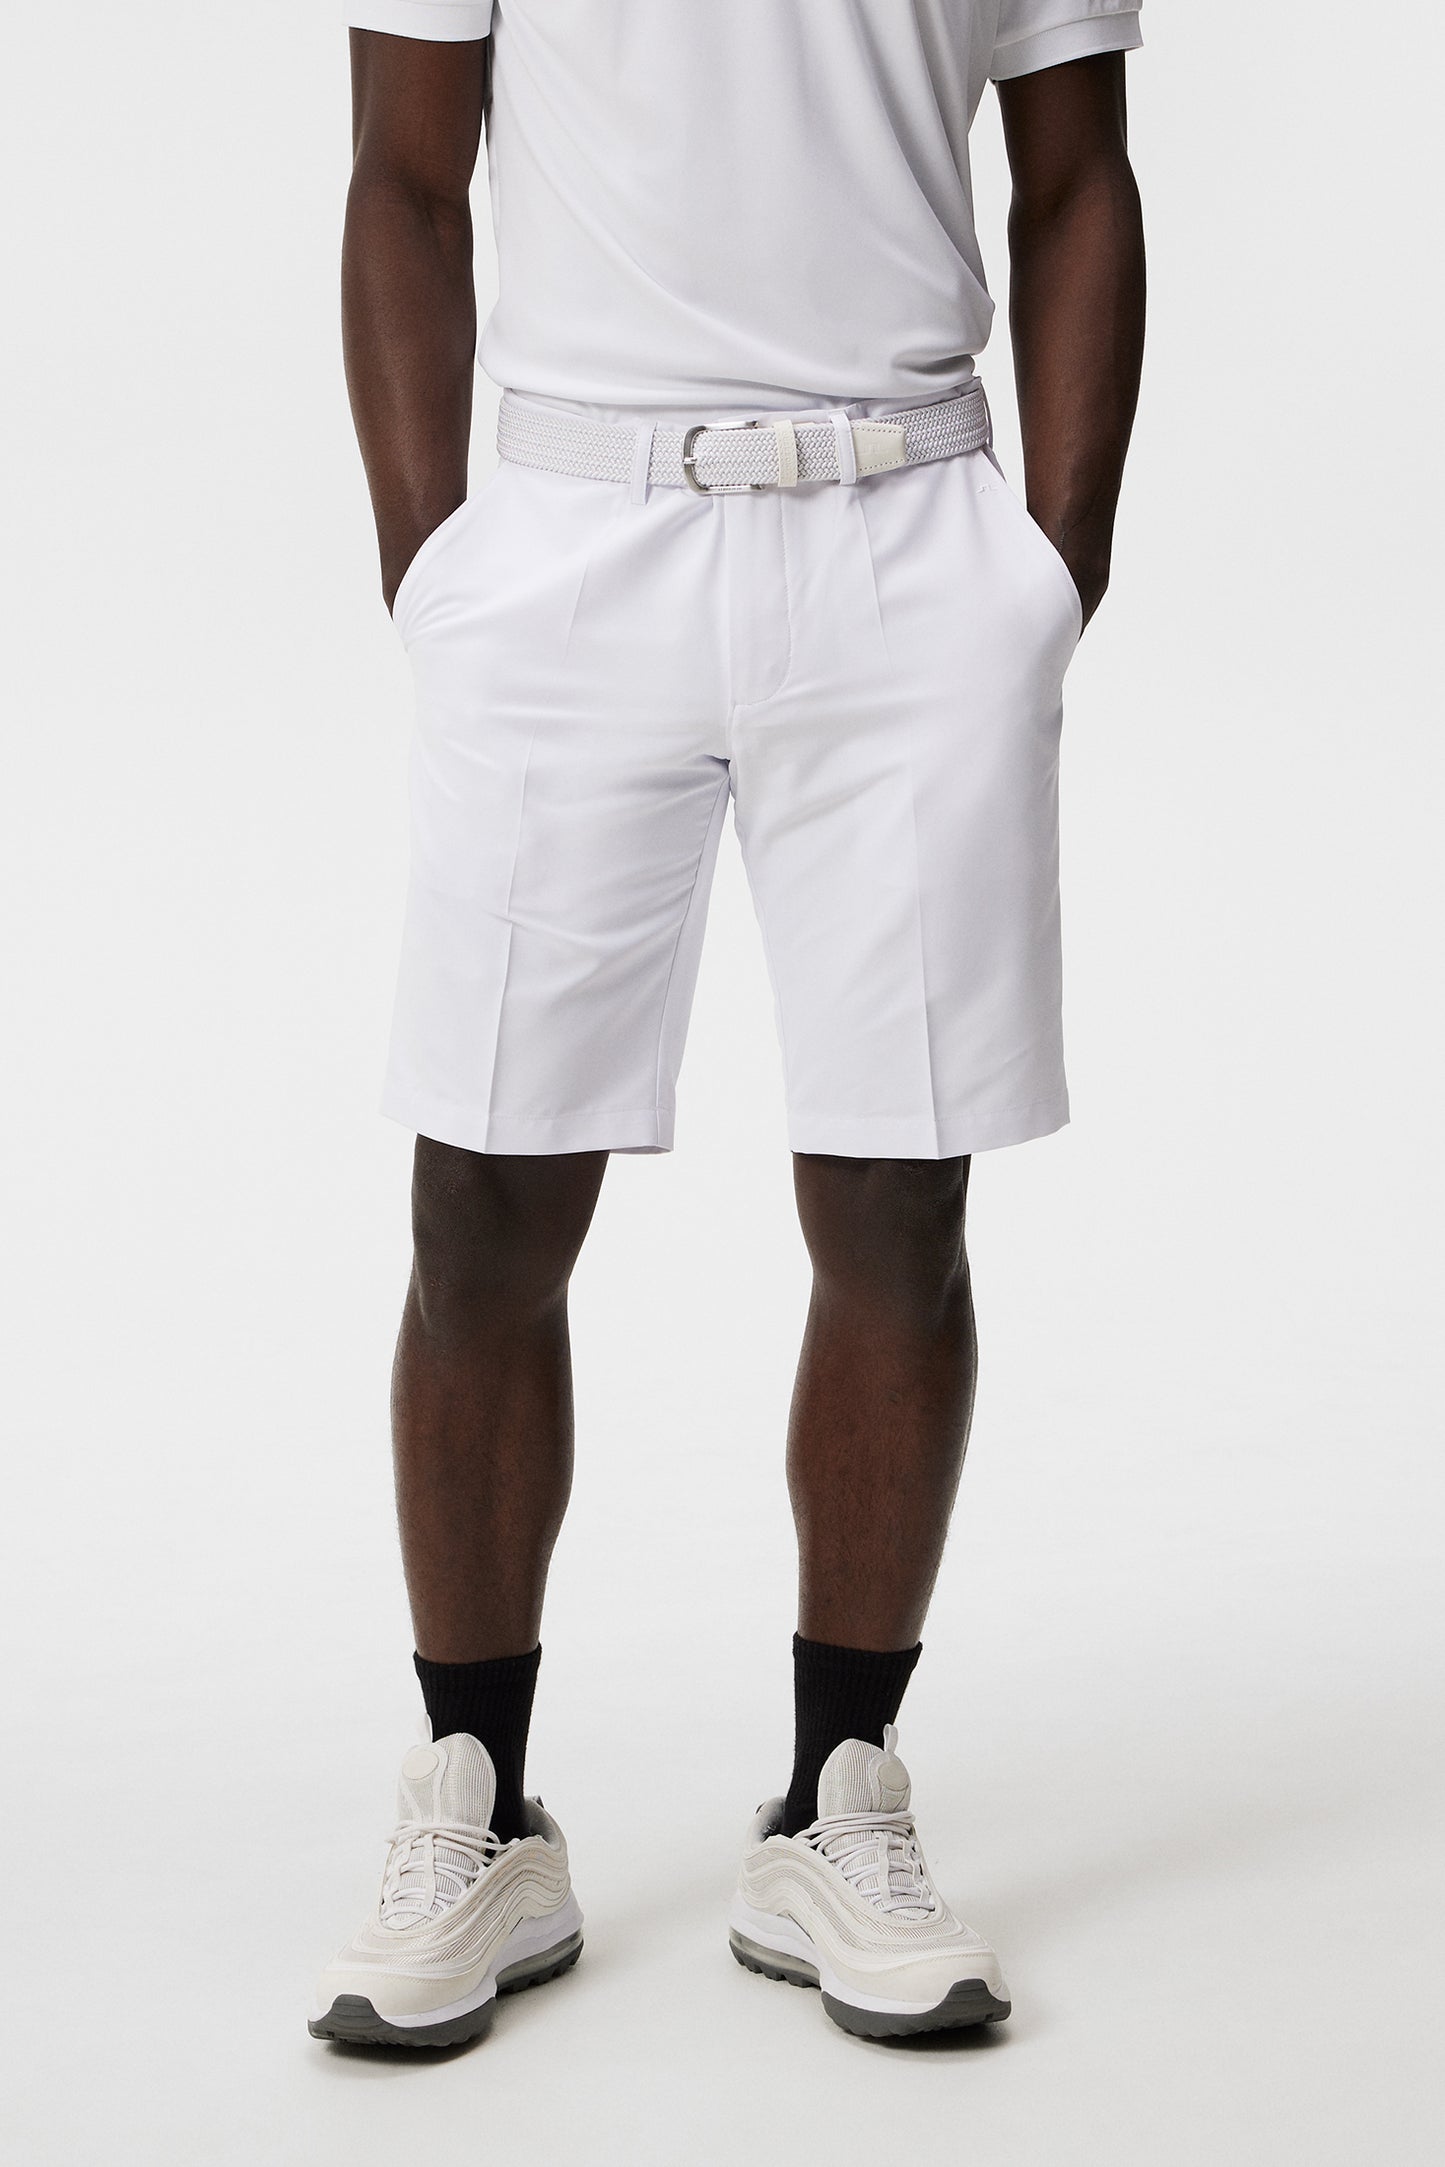 Somle Shorts / White